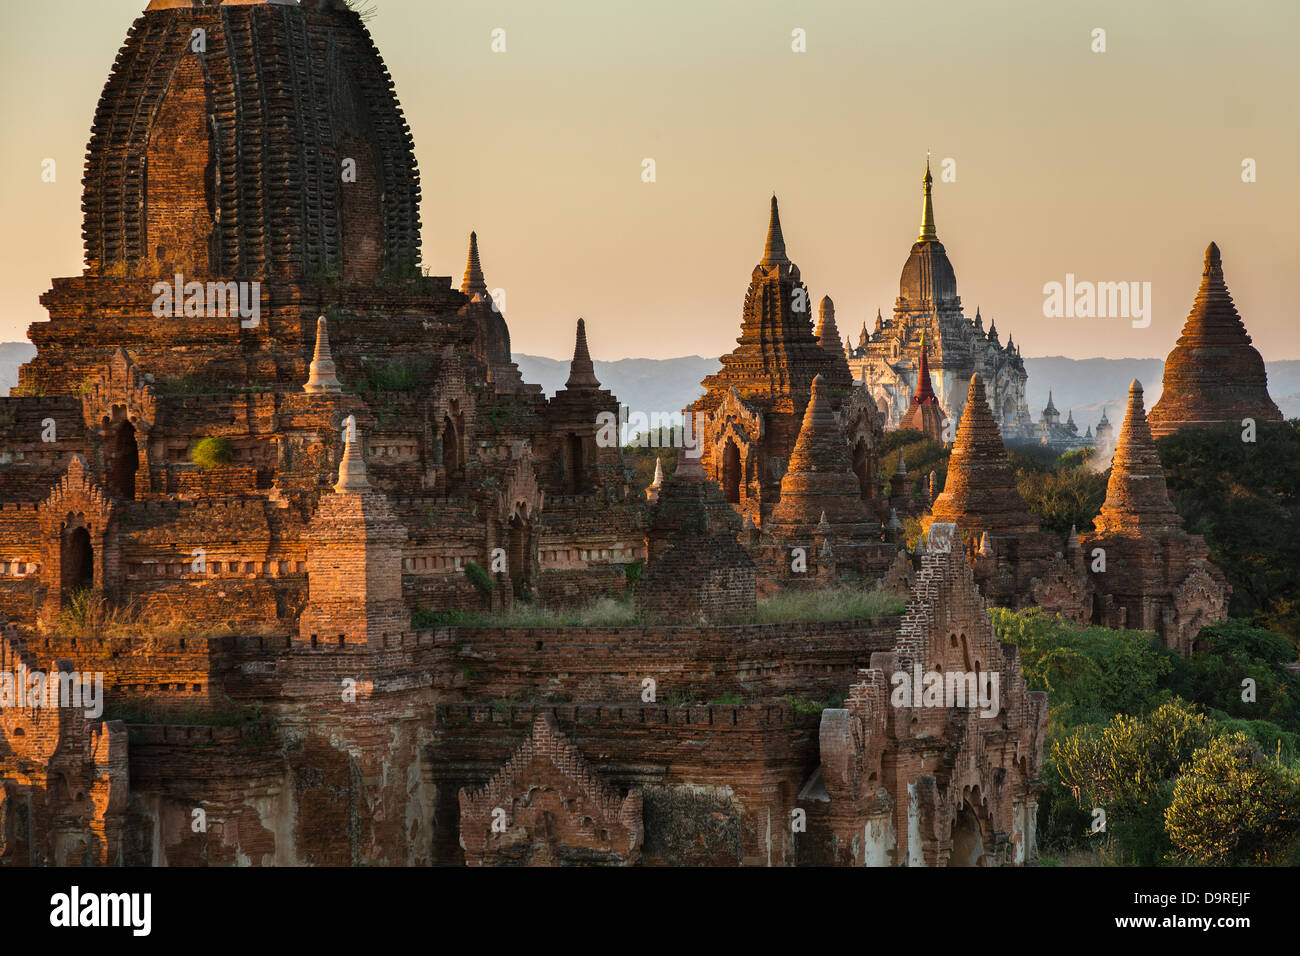 the Temples of Bagan, Myanmar (Burma) Stock Photo